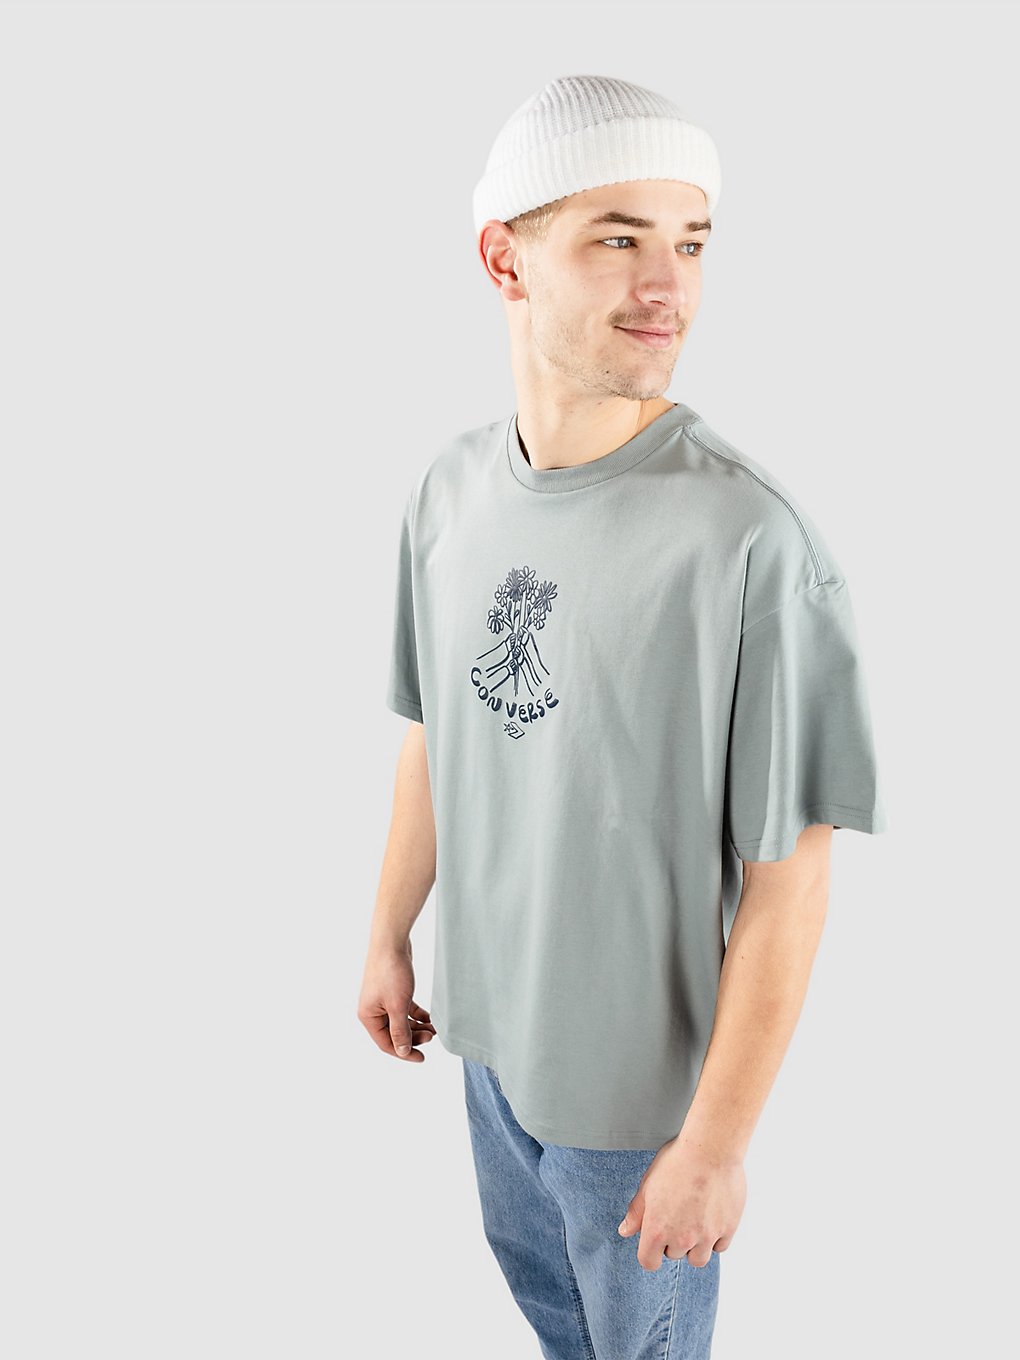 Converse Flower Friends T-Shirt tidepool grey kaufen